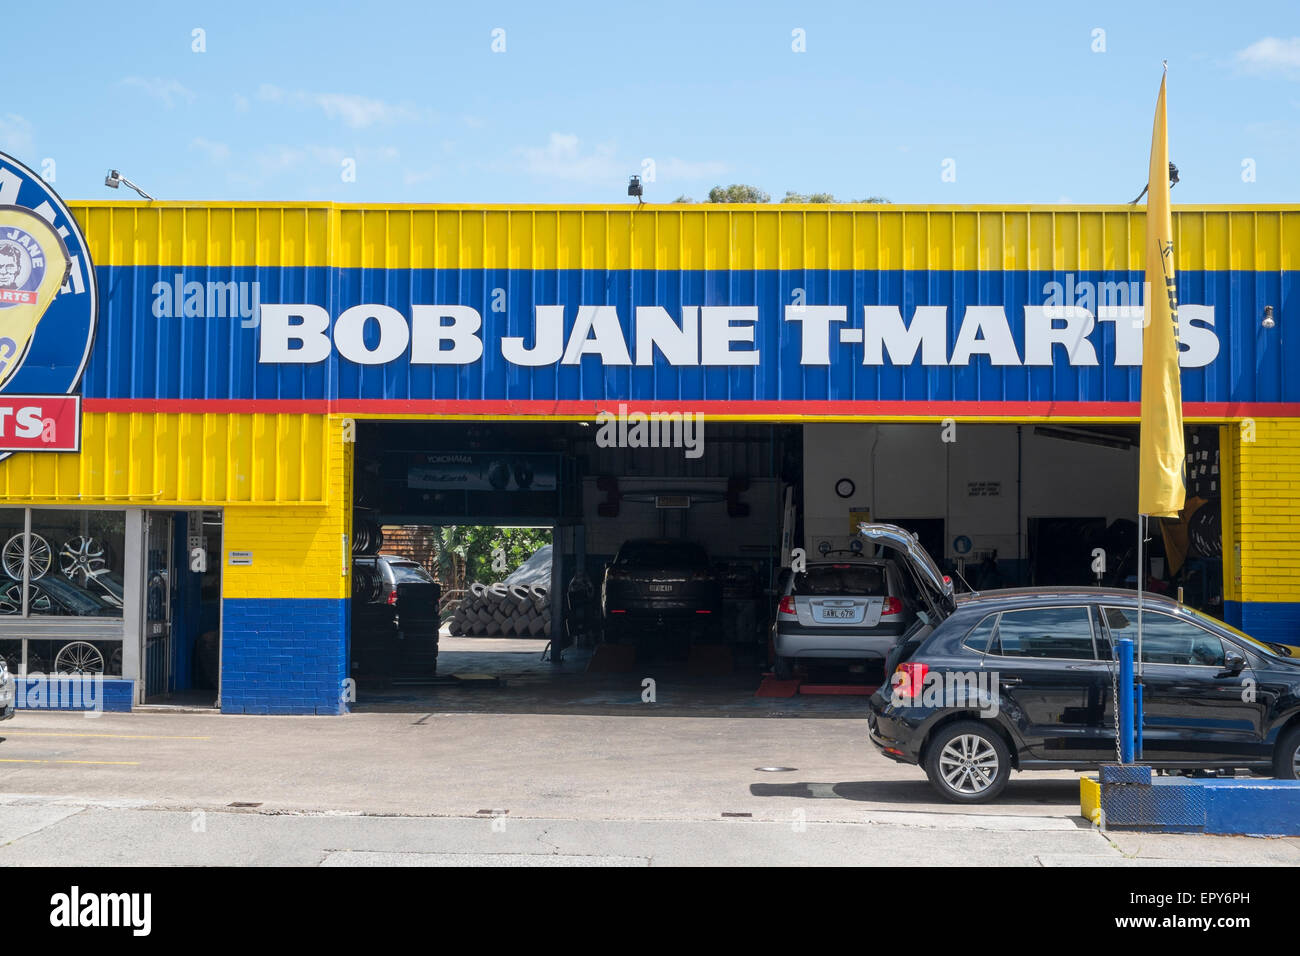 Bob Jane T Marts auto tyre repairs garage in Bondi junction Sydney,Australia. Stock Photo